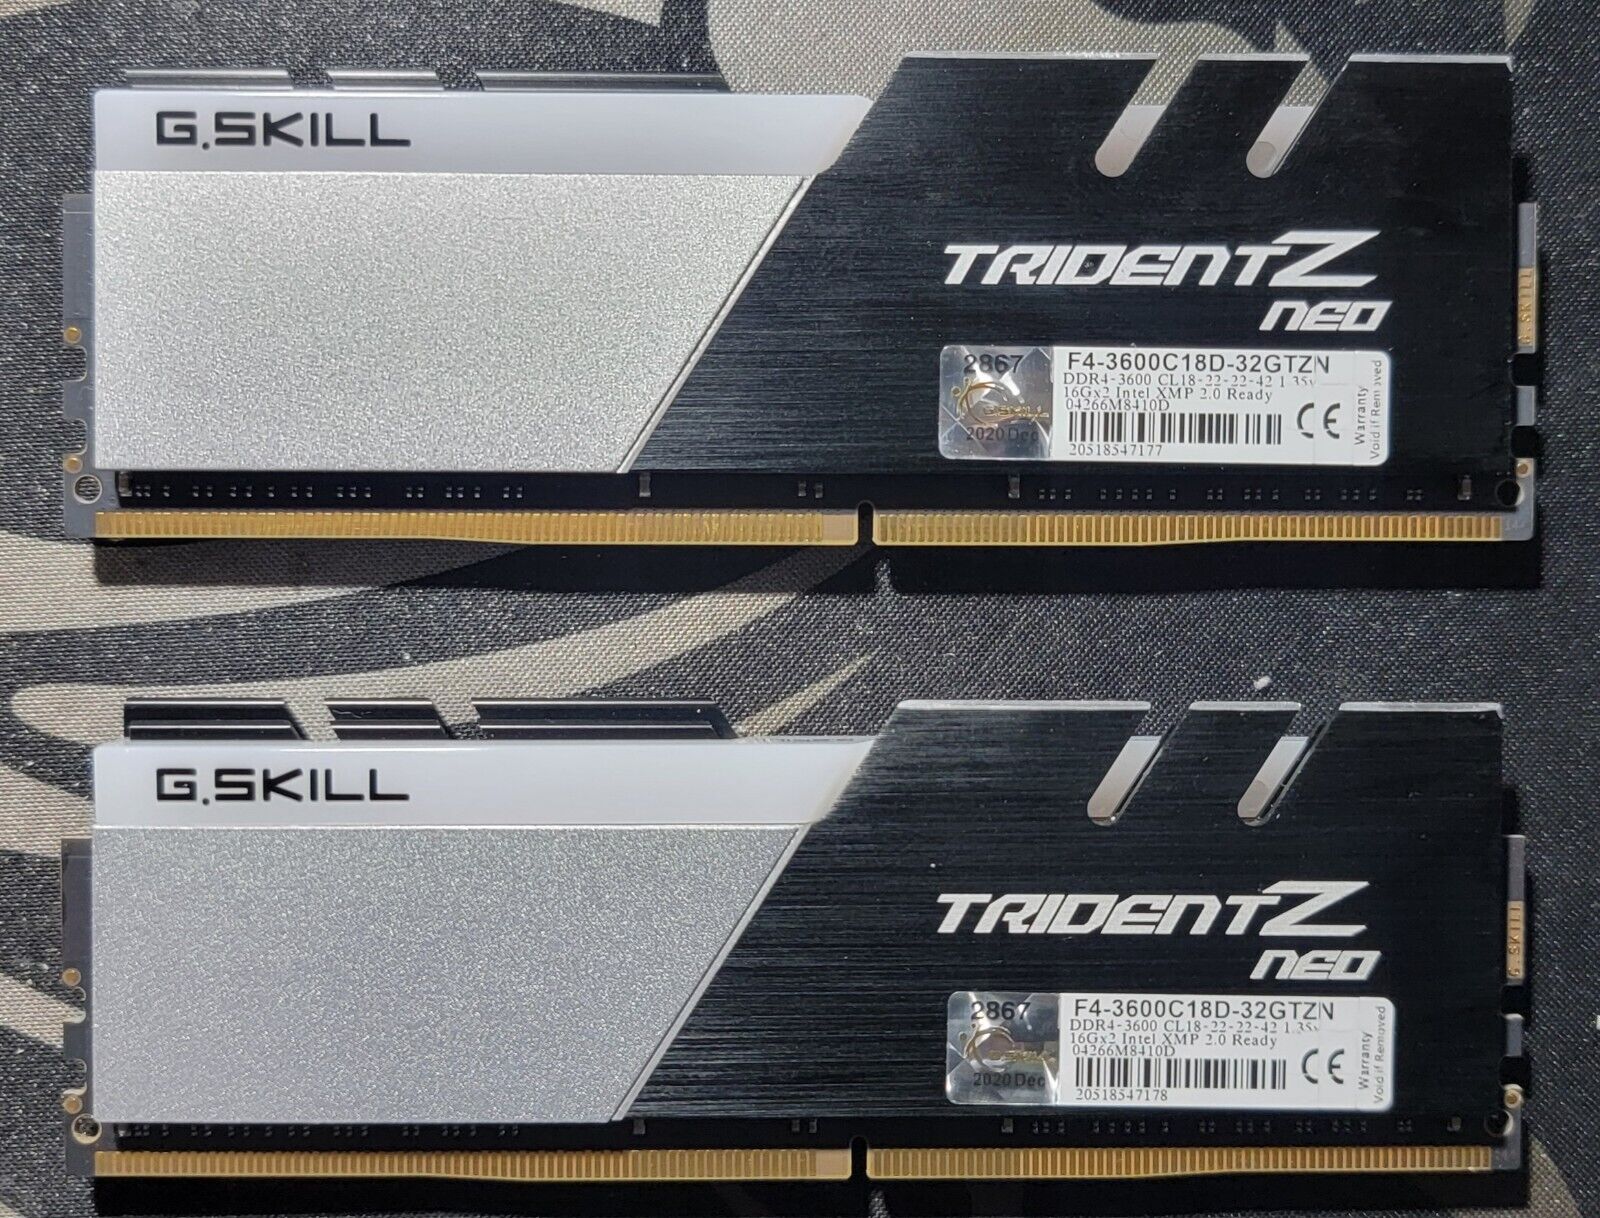 G.SKILL Trident Z Neo 32GB (2 x 16GB) 288-Pin RGB DDR4 SDRAM Desktop Memory for